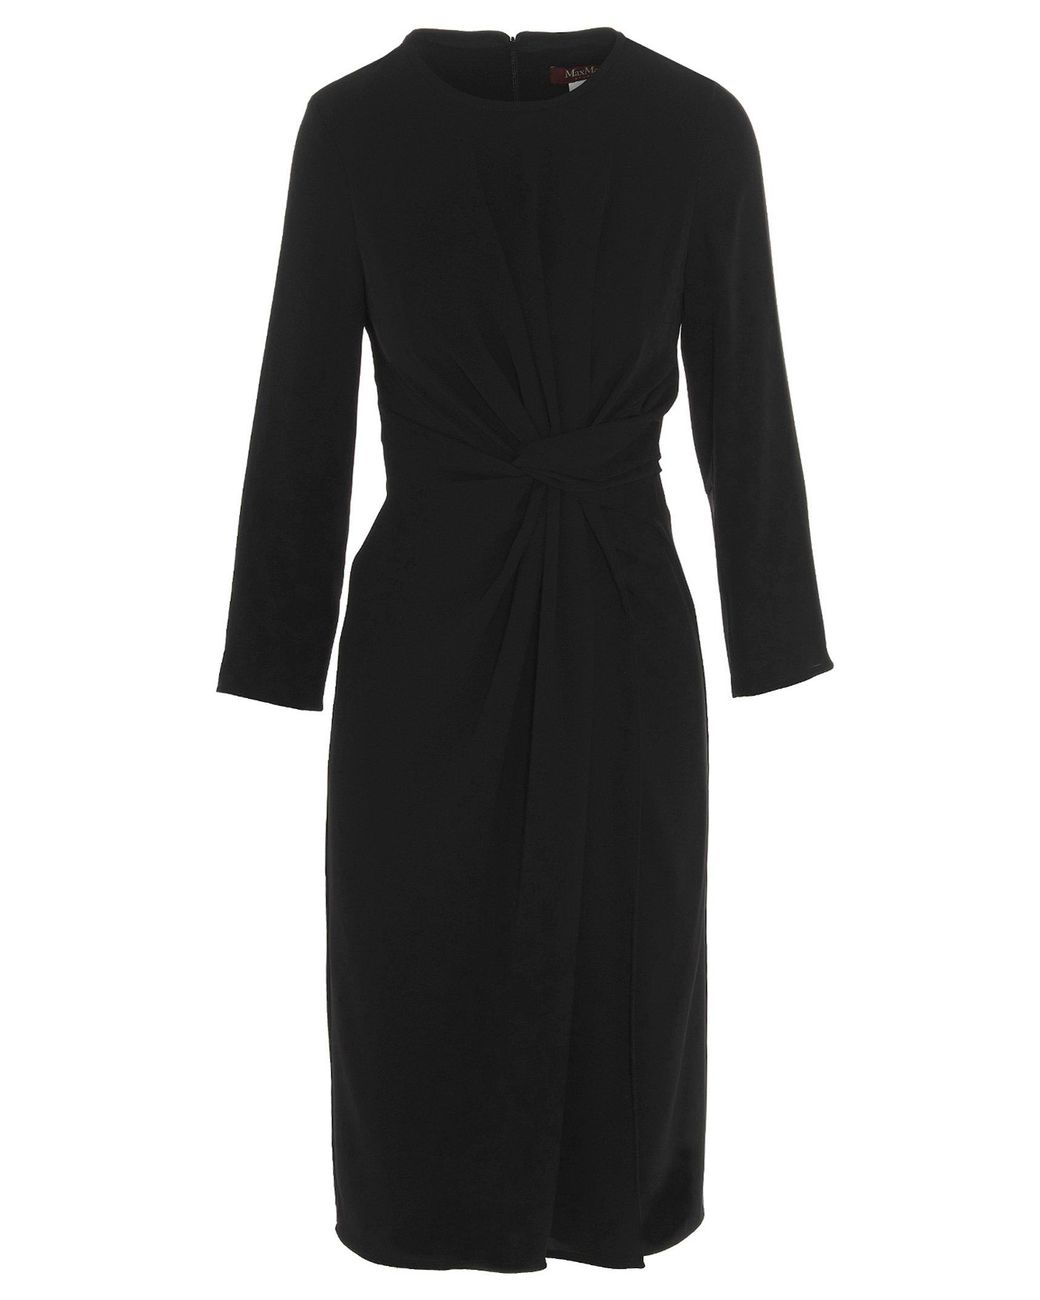 Max Mara Studio Synthetic Long-sleeve Midi Dress in Black - Lyst